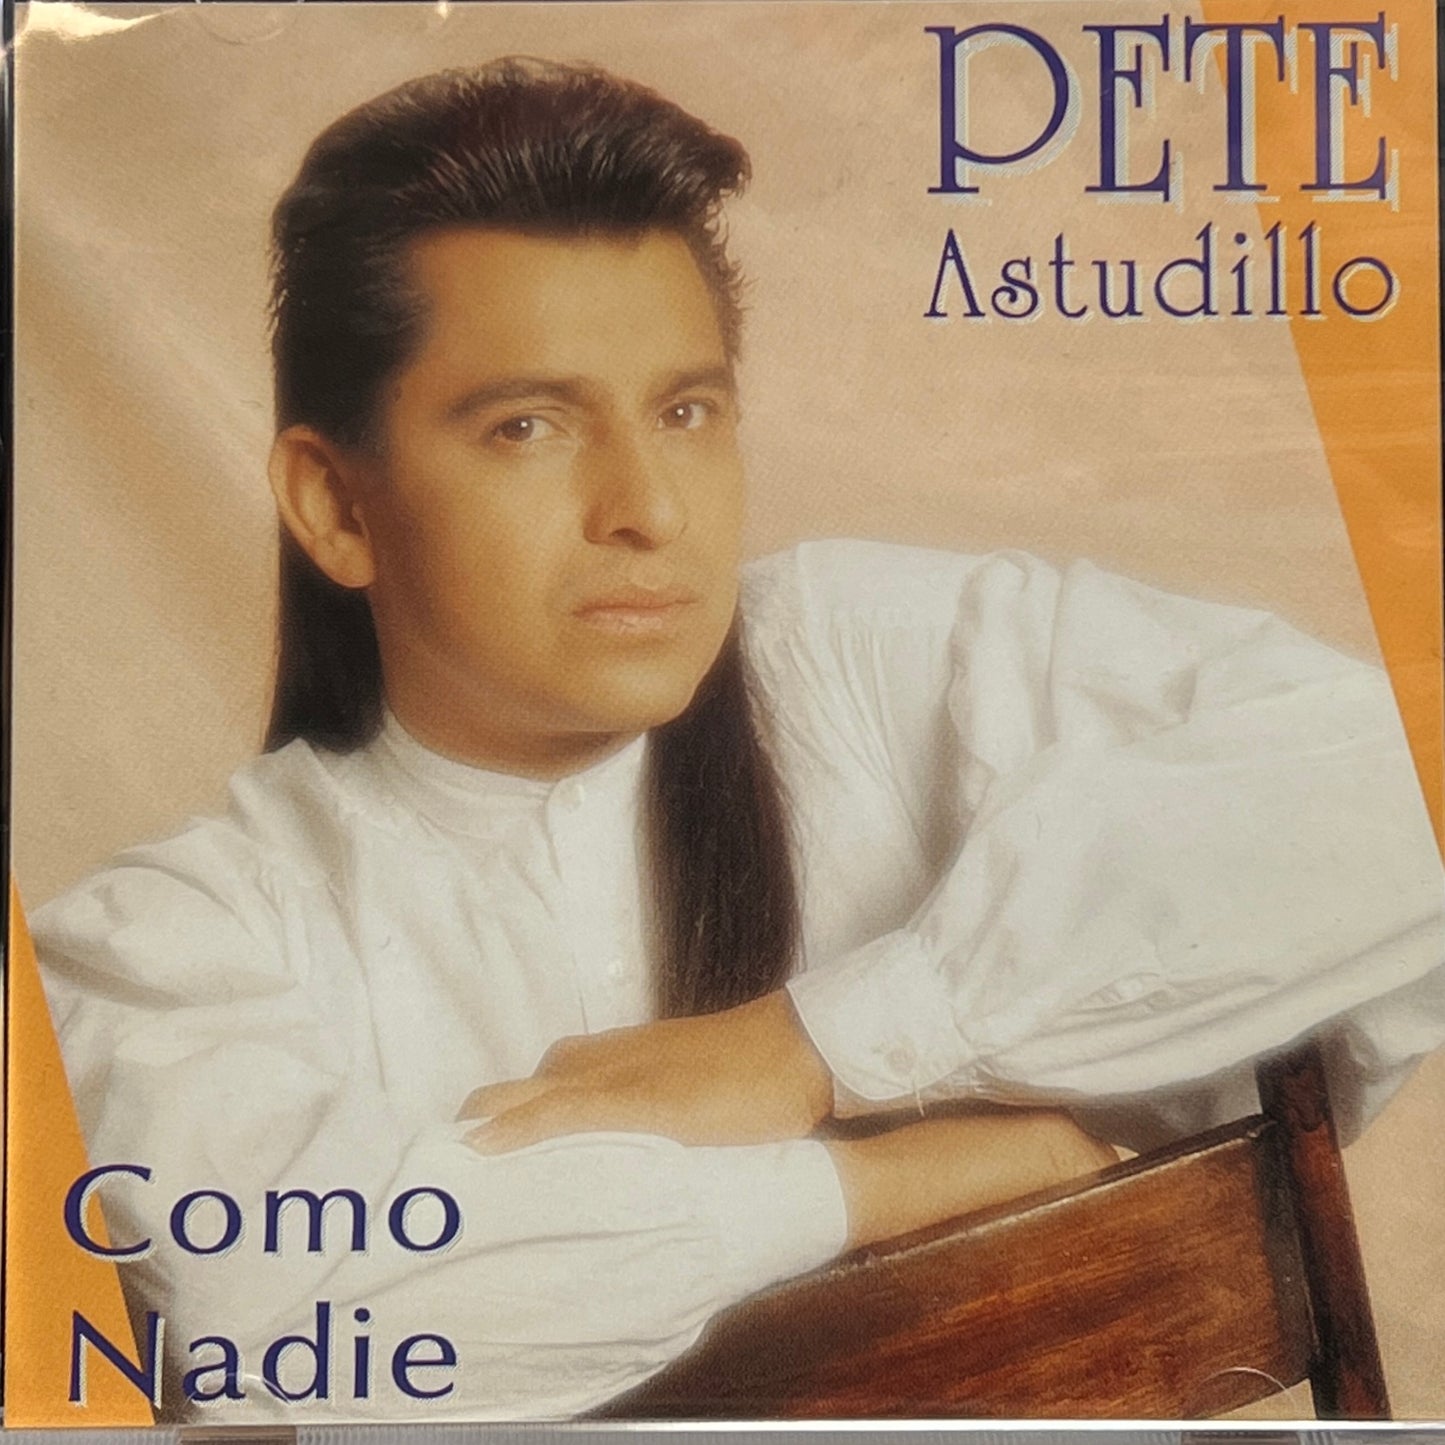 Pete Astudillo - Como Nadie (CD)